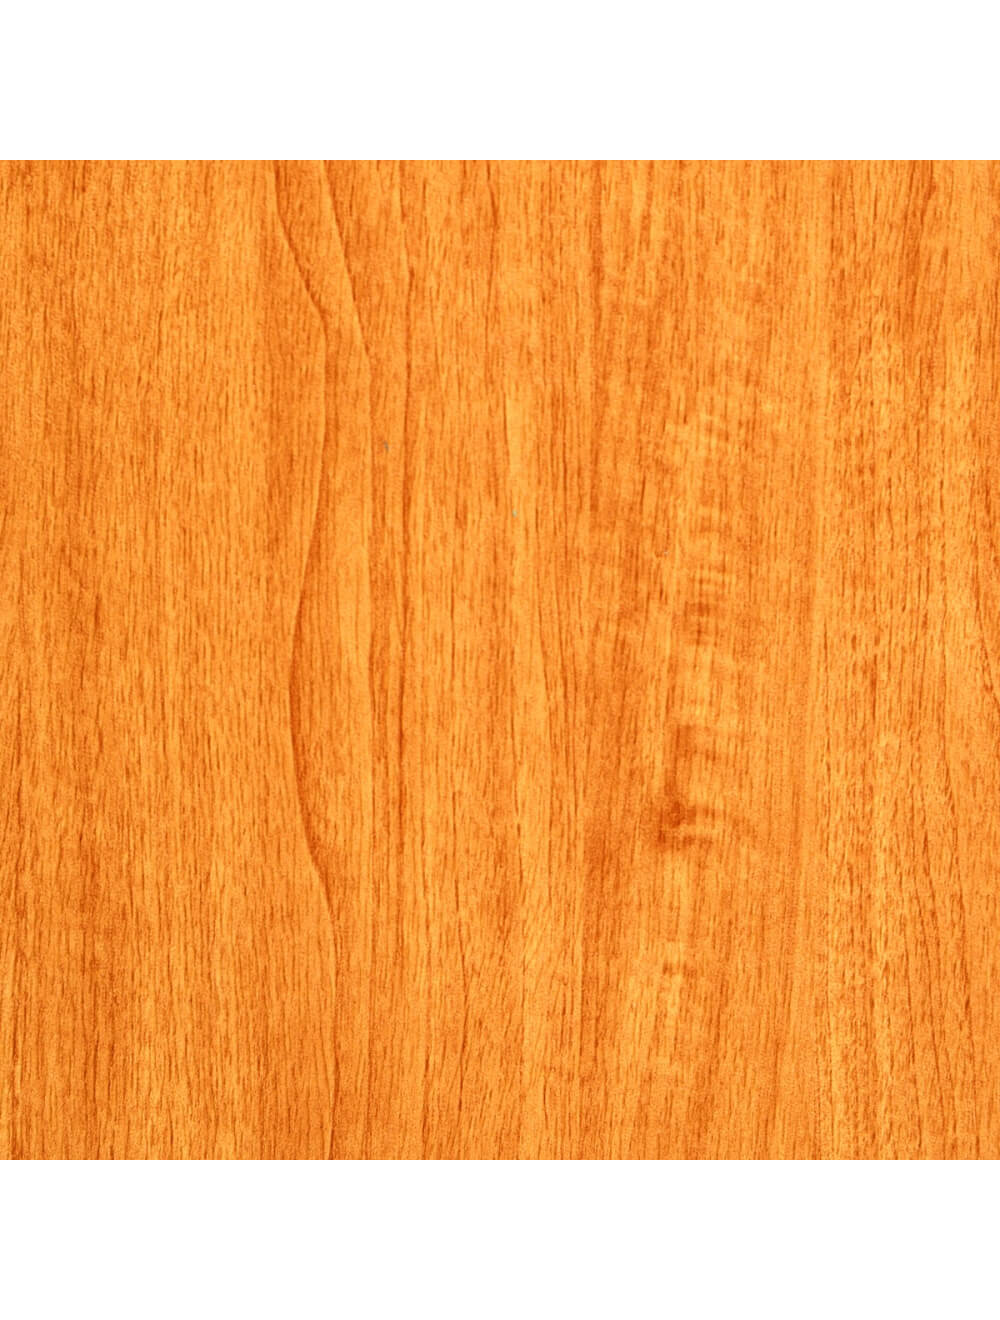 Washingtoni sárga fa gabona anyagminta (E935)